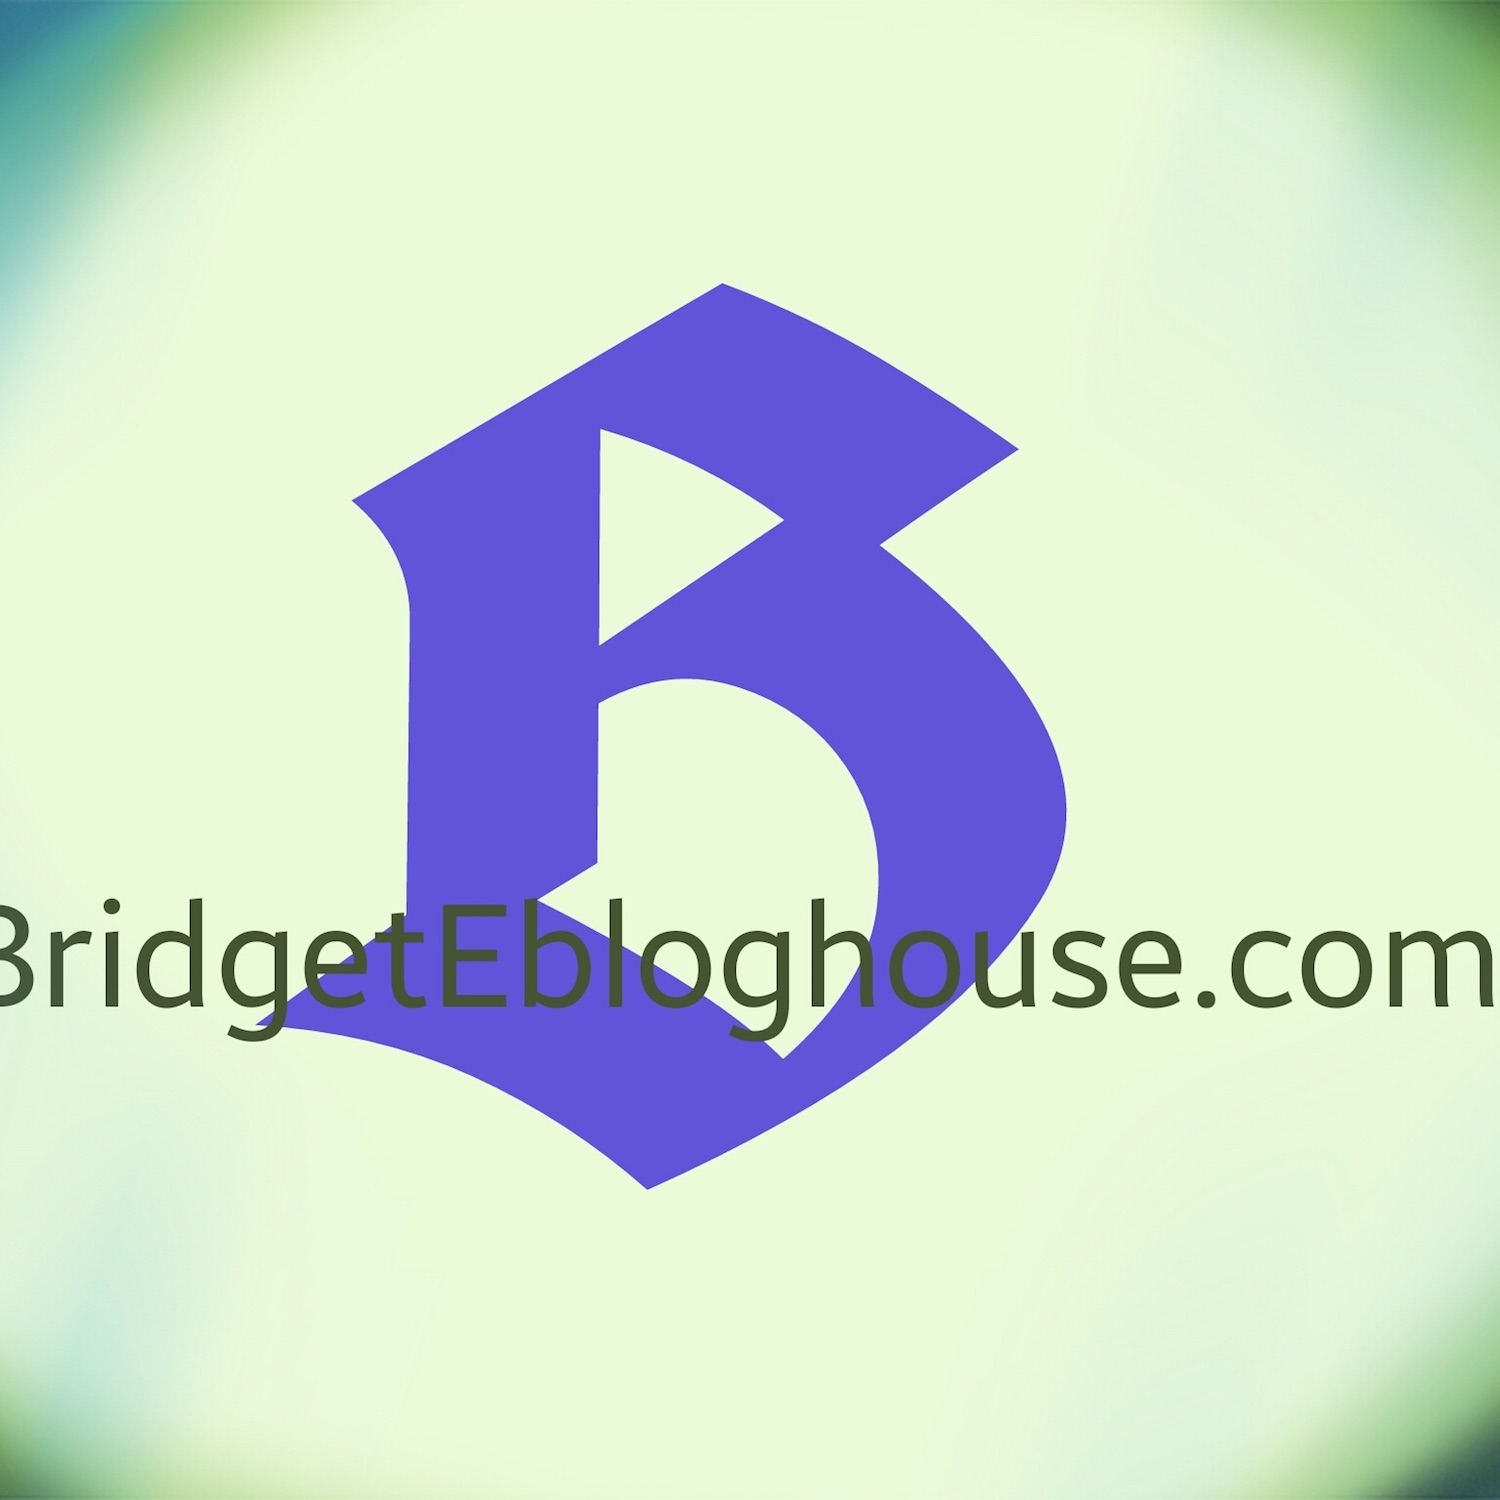 BridgetEE Bloghouse